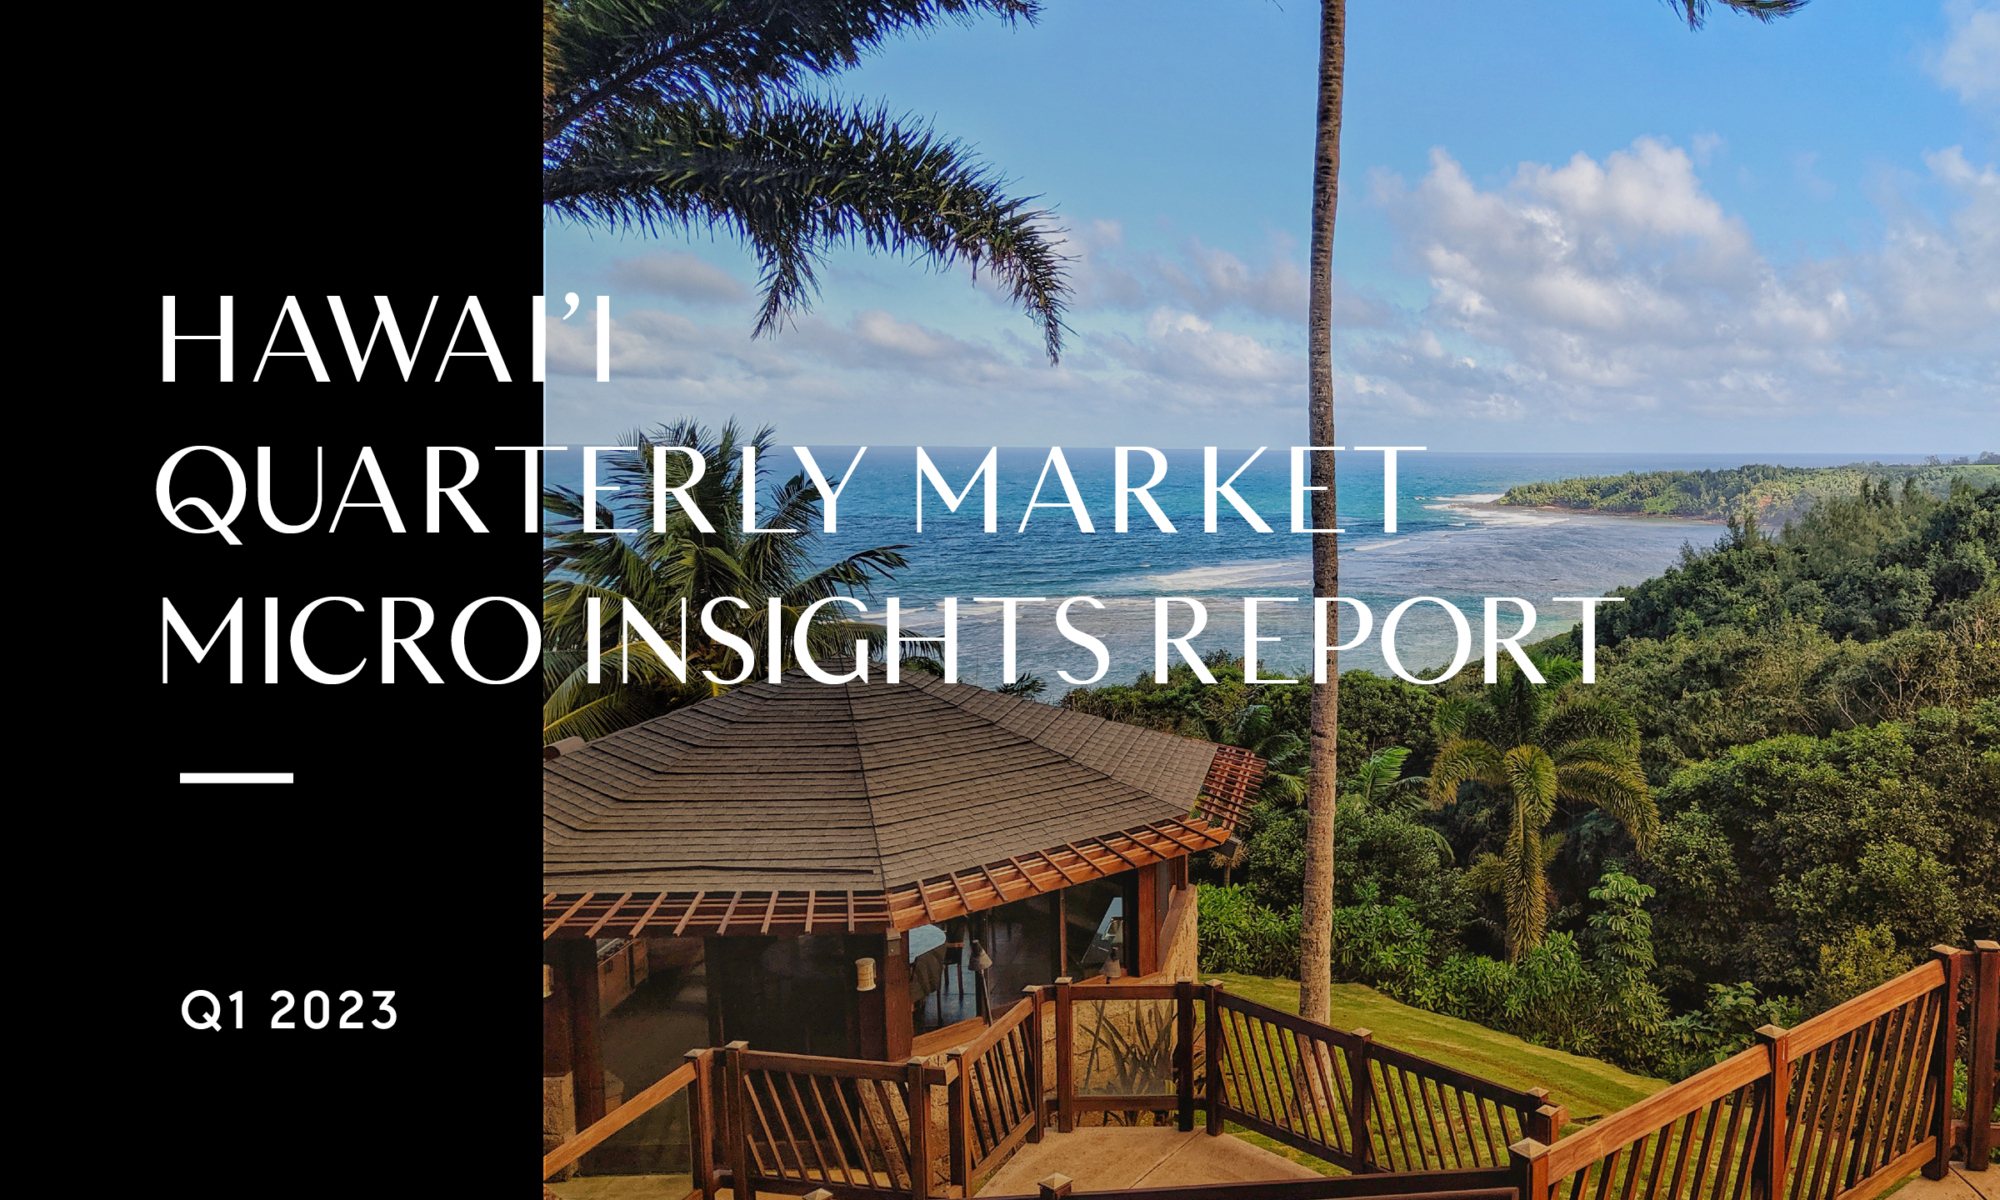 Hawaii Quarterly Market Micro Insights Report: Q1 2023